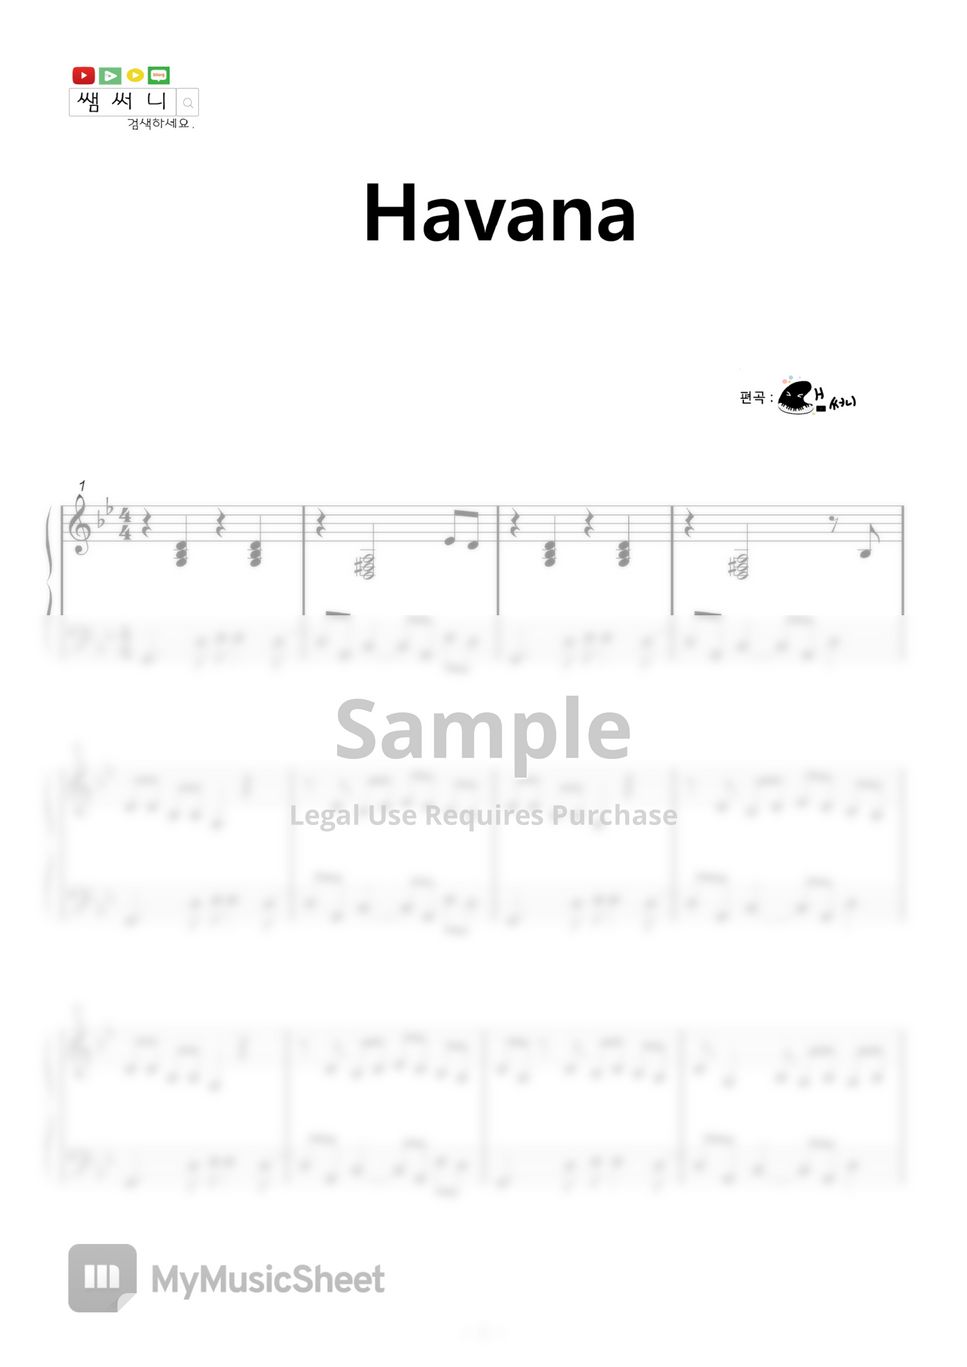 Camila Cabello - Havana (쉬운악보) by 쌤써니 by samsunny